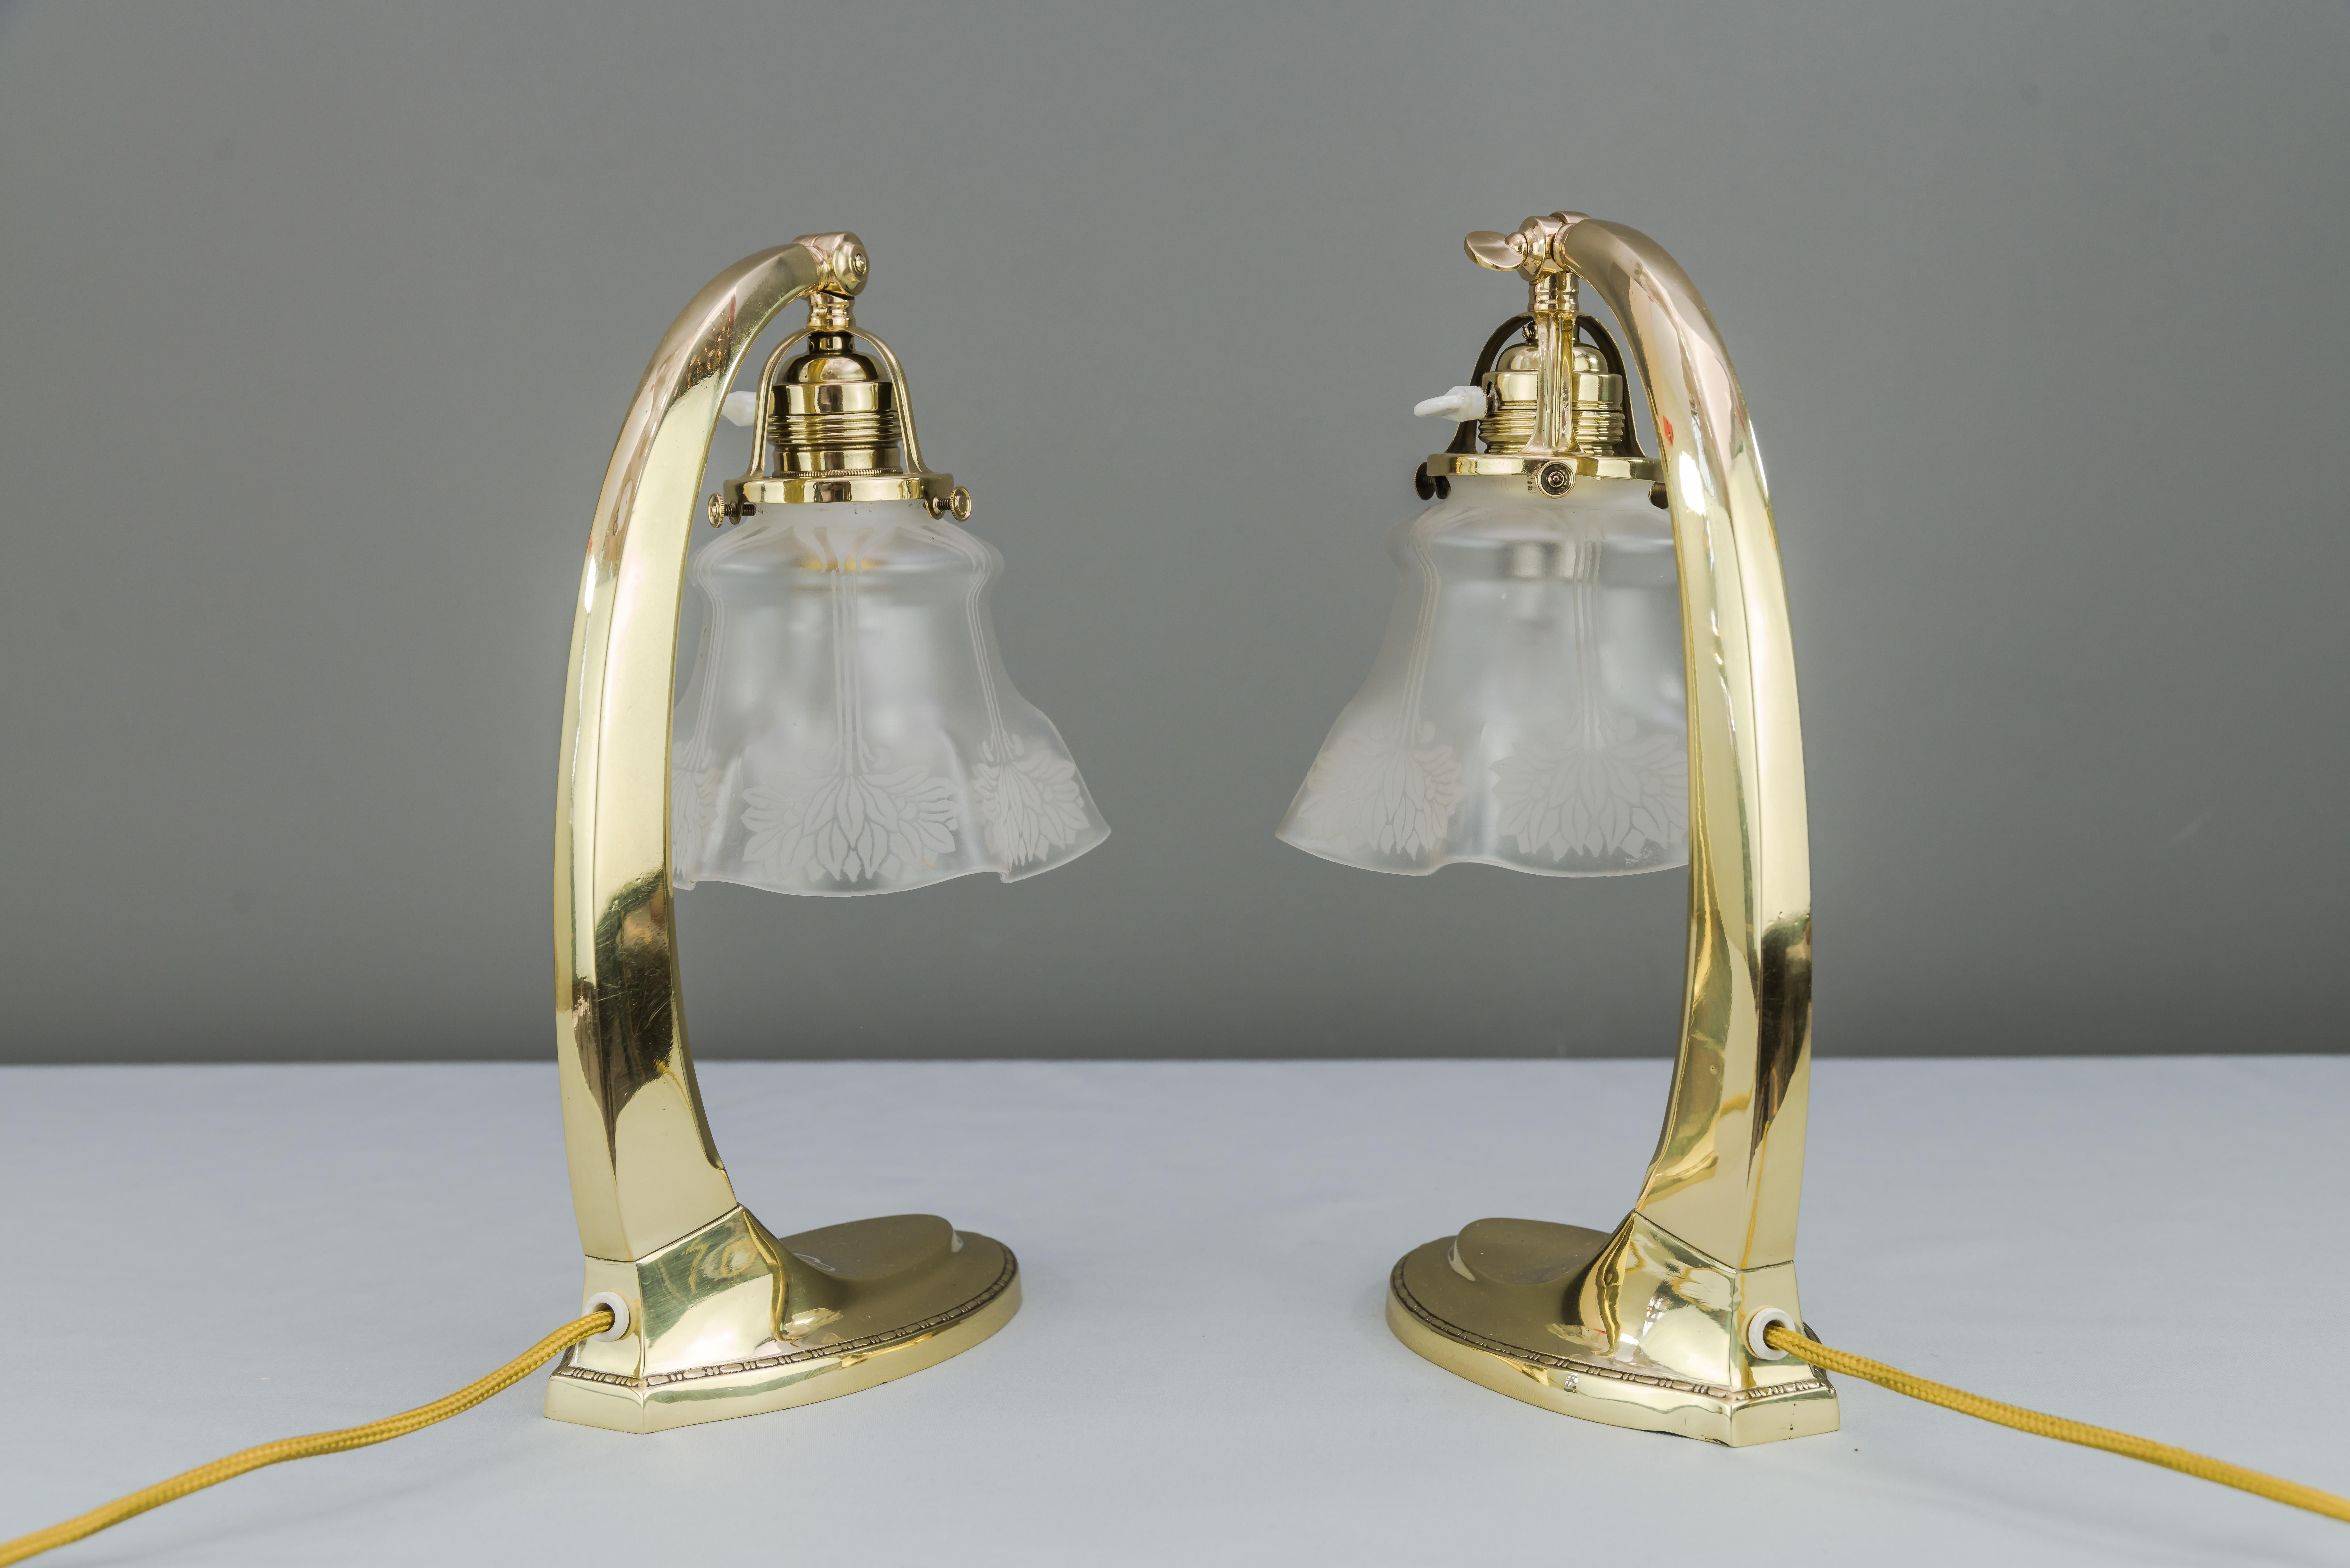 Two Jugendstil Table Lamps 1907 with Original Glas Shades For Sale 1